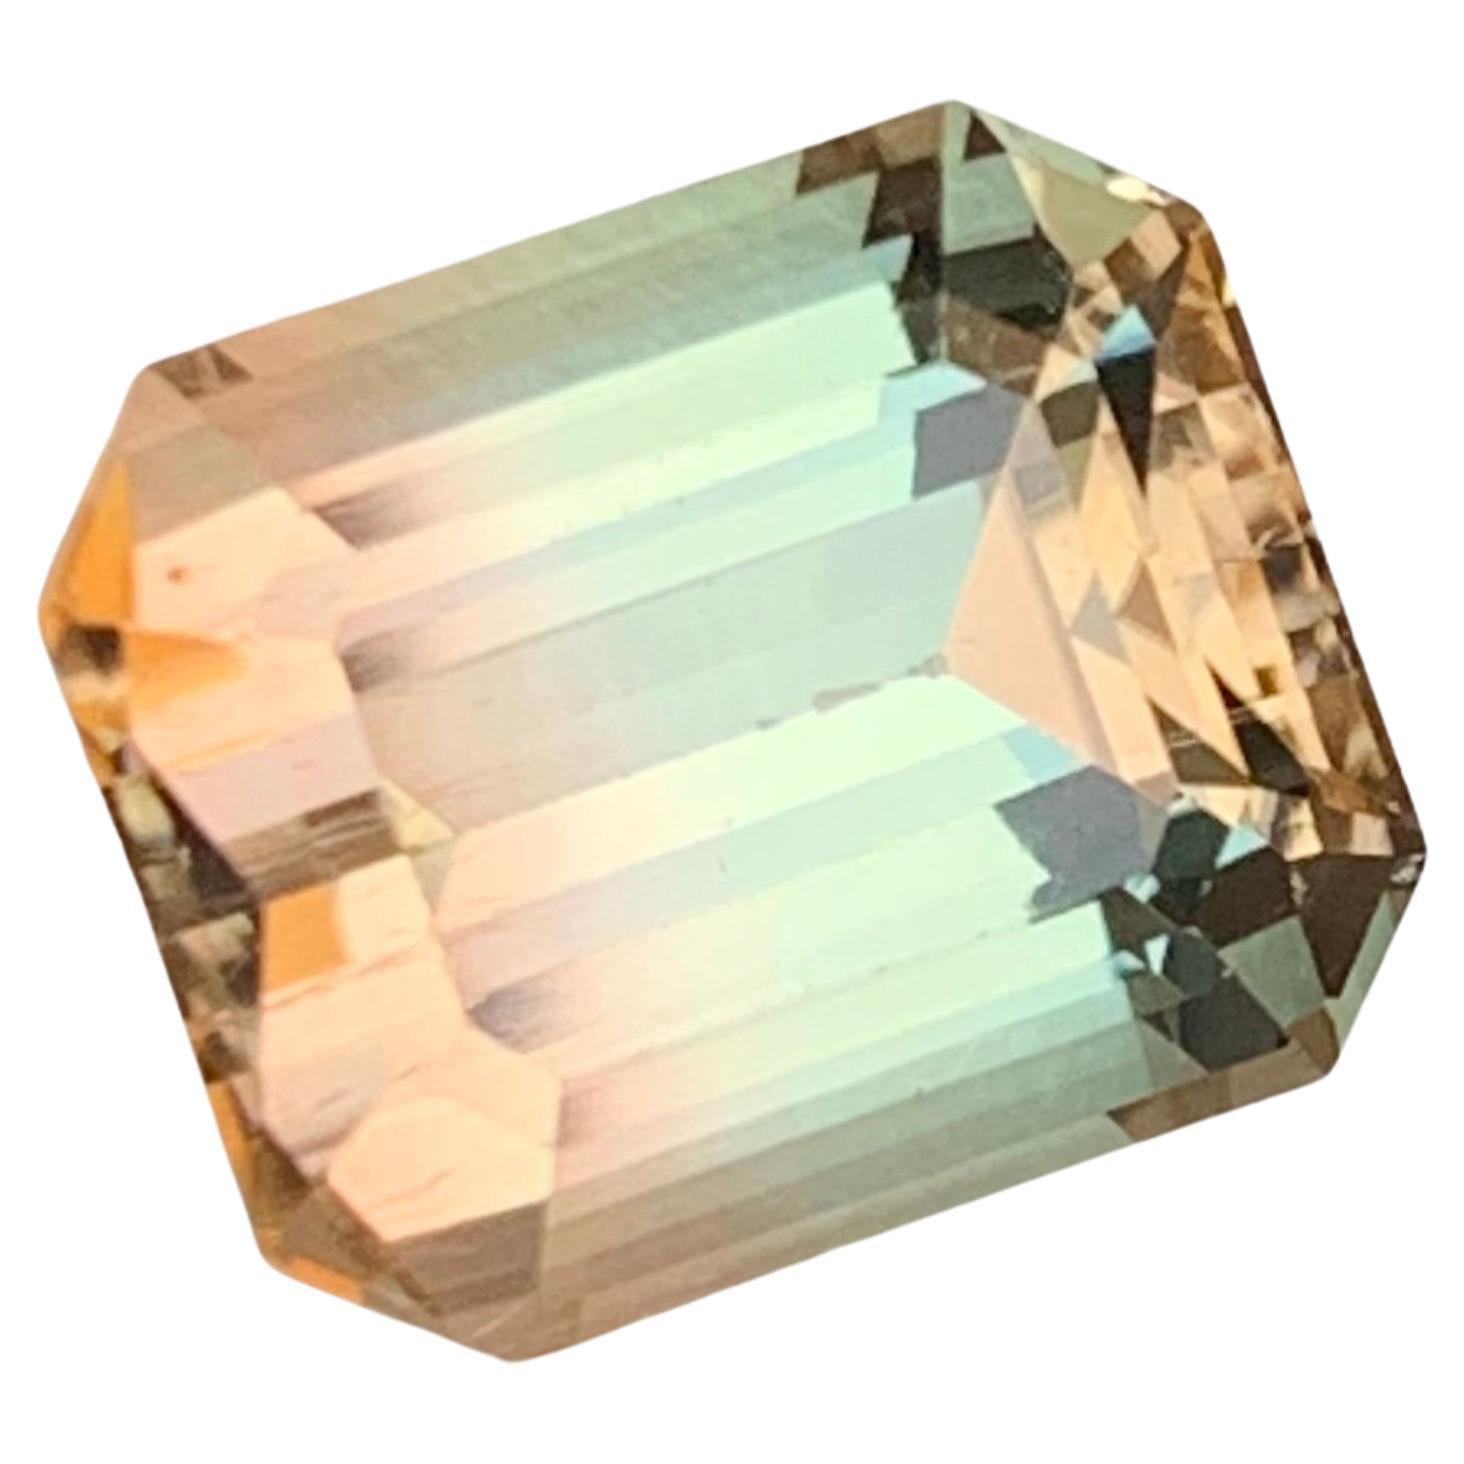 Rare Bicolor Natural Tourmaline Loose Gemstone, 5.80 Carat-Emerald/Octagon Cut For Sale